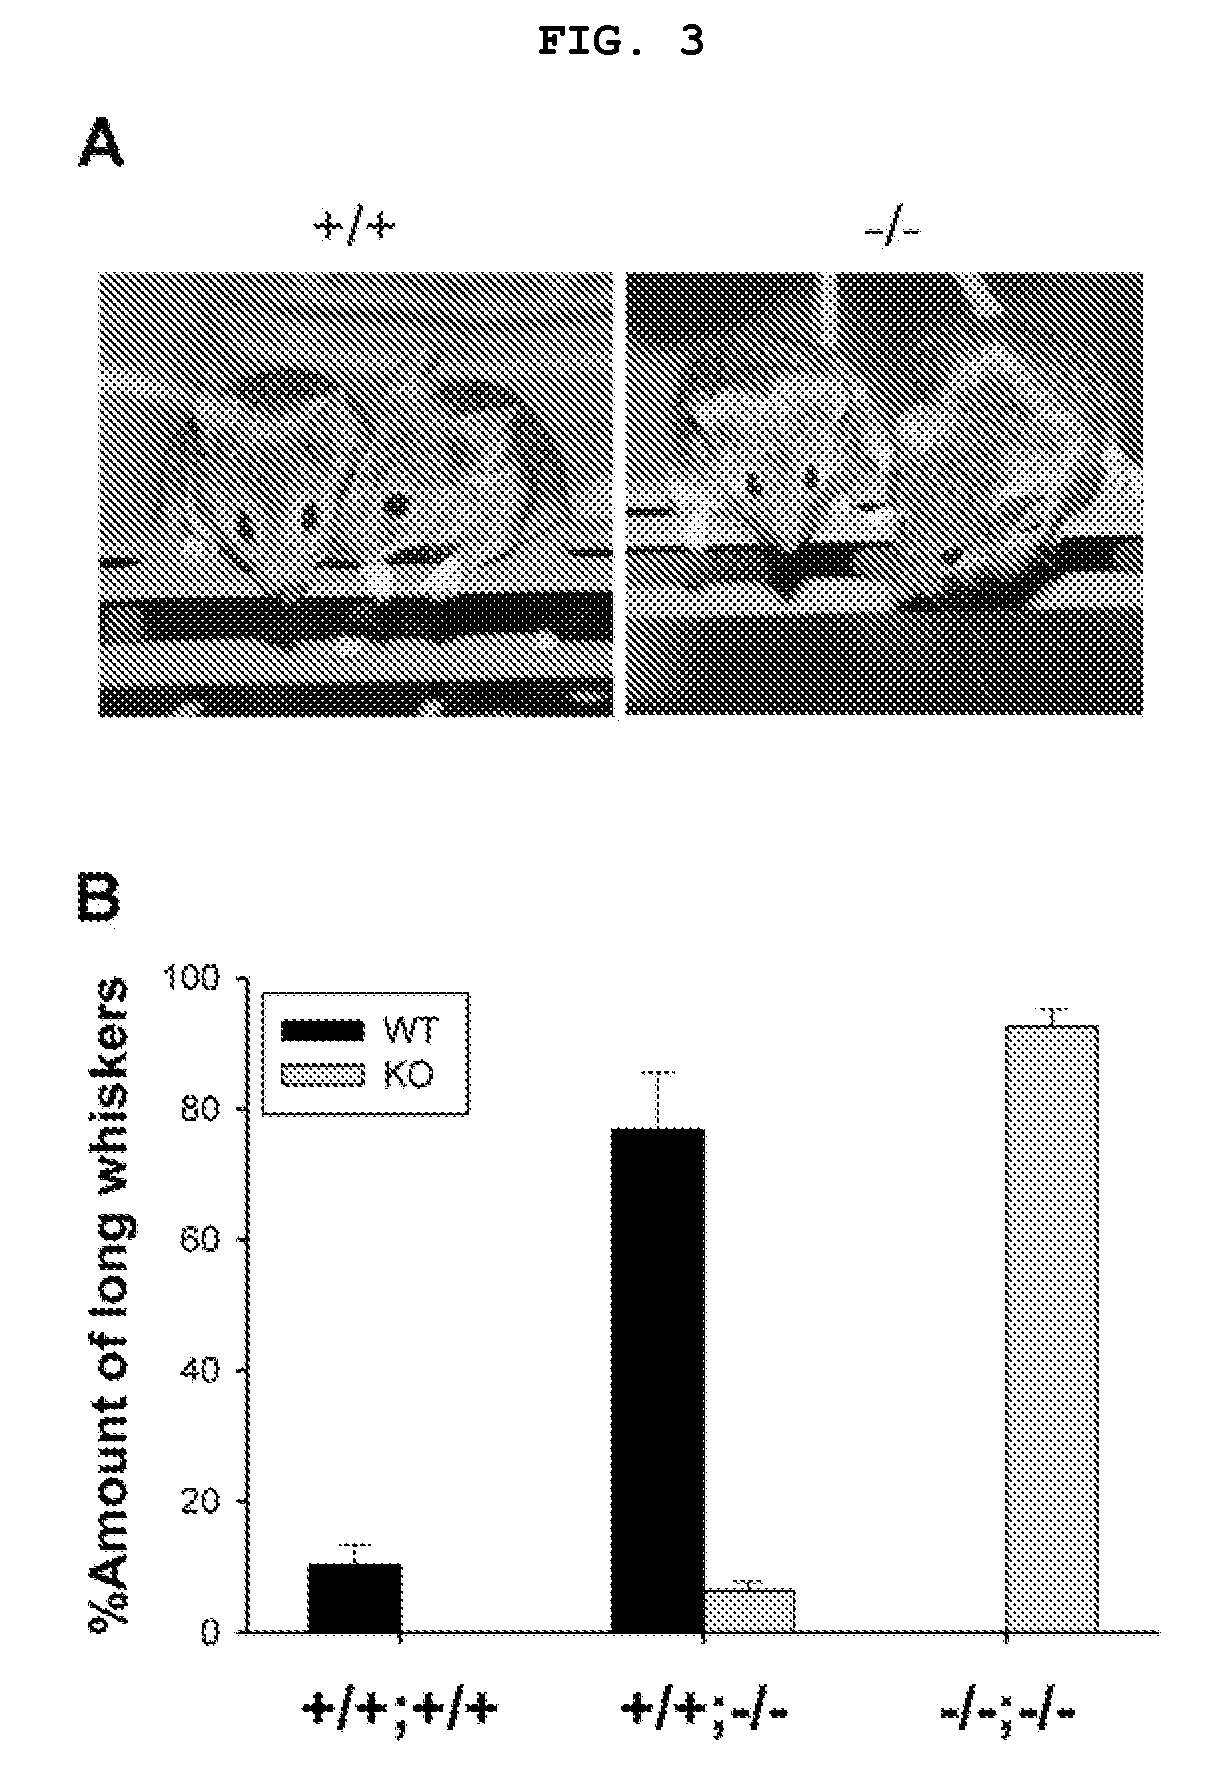 Phospholipase c beta1 (plcbeta1) knockout mice as a model system for testing schizophrenia drugs